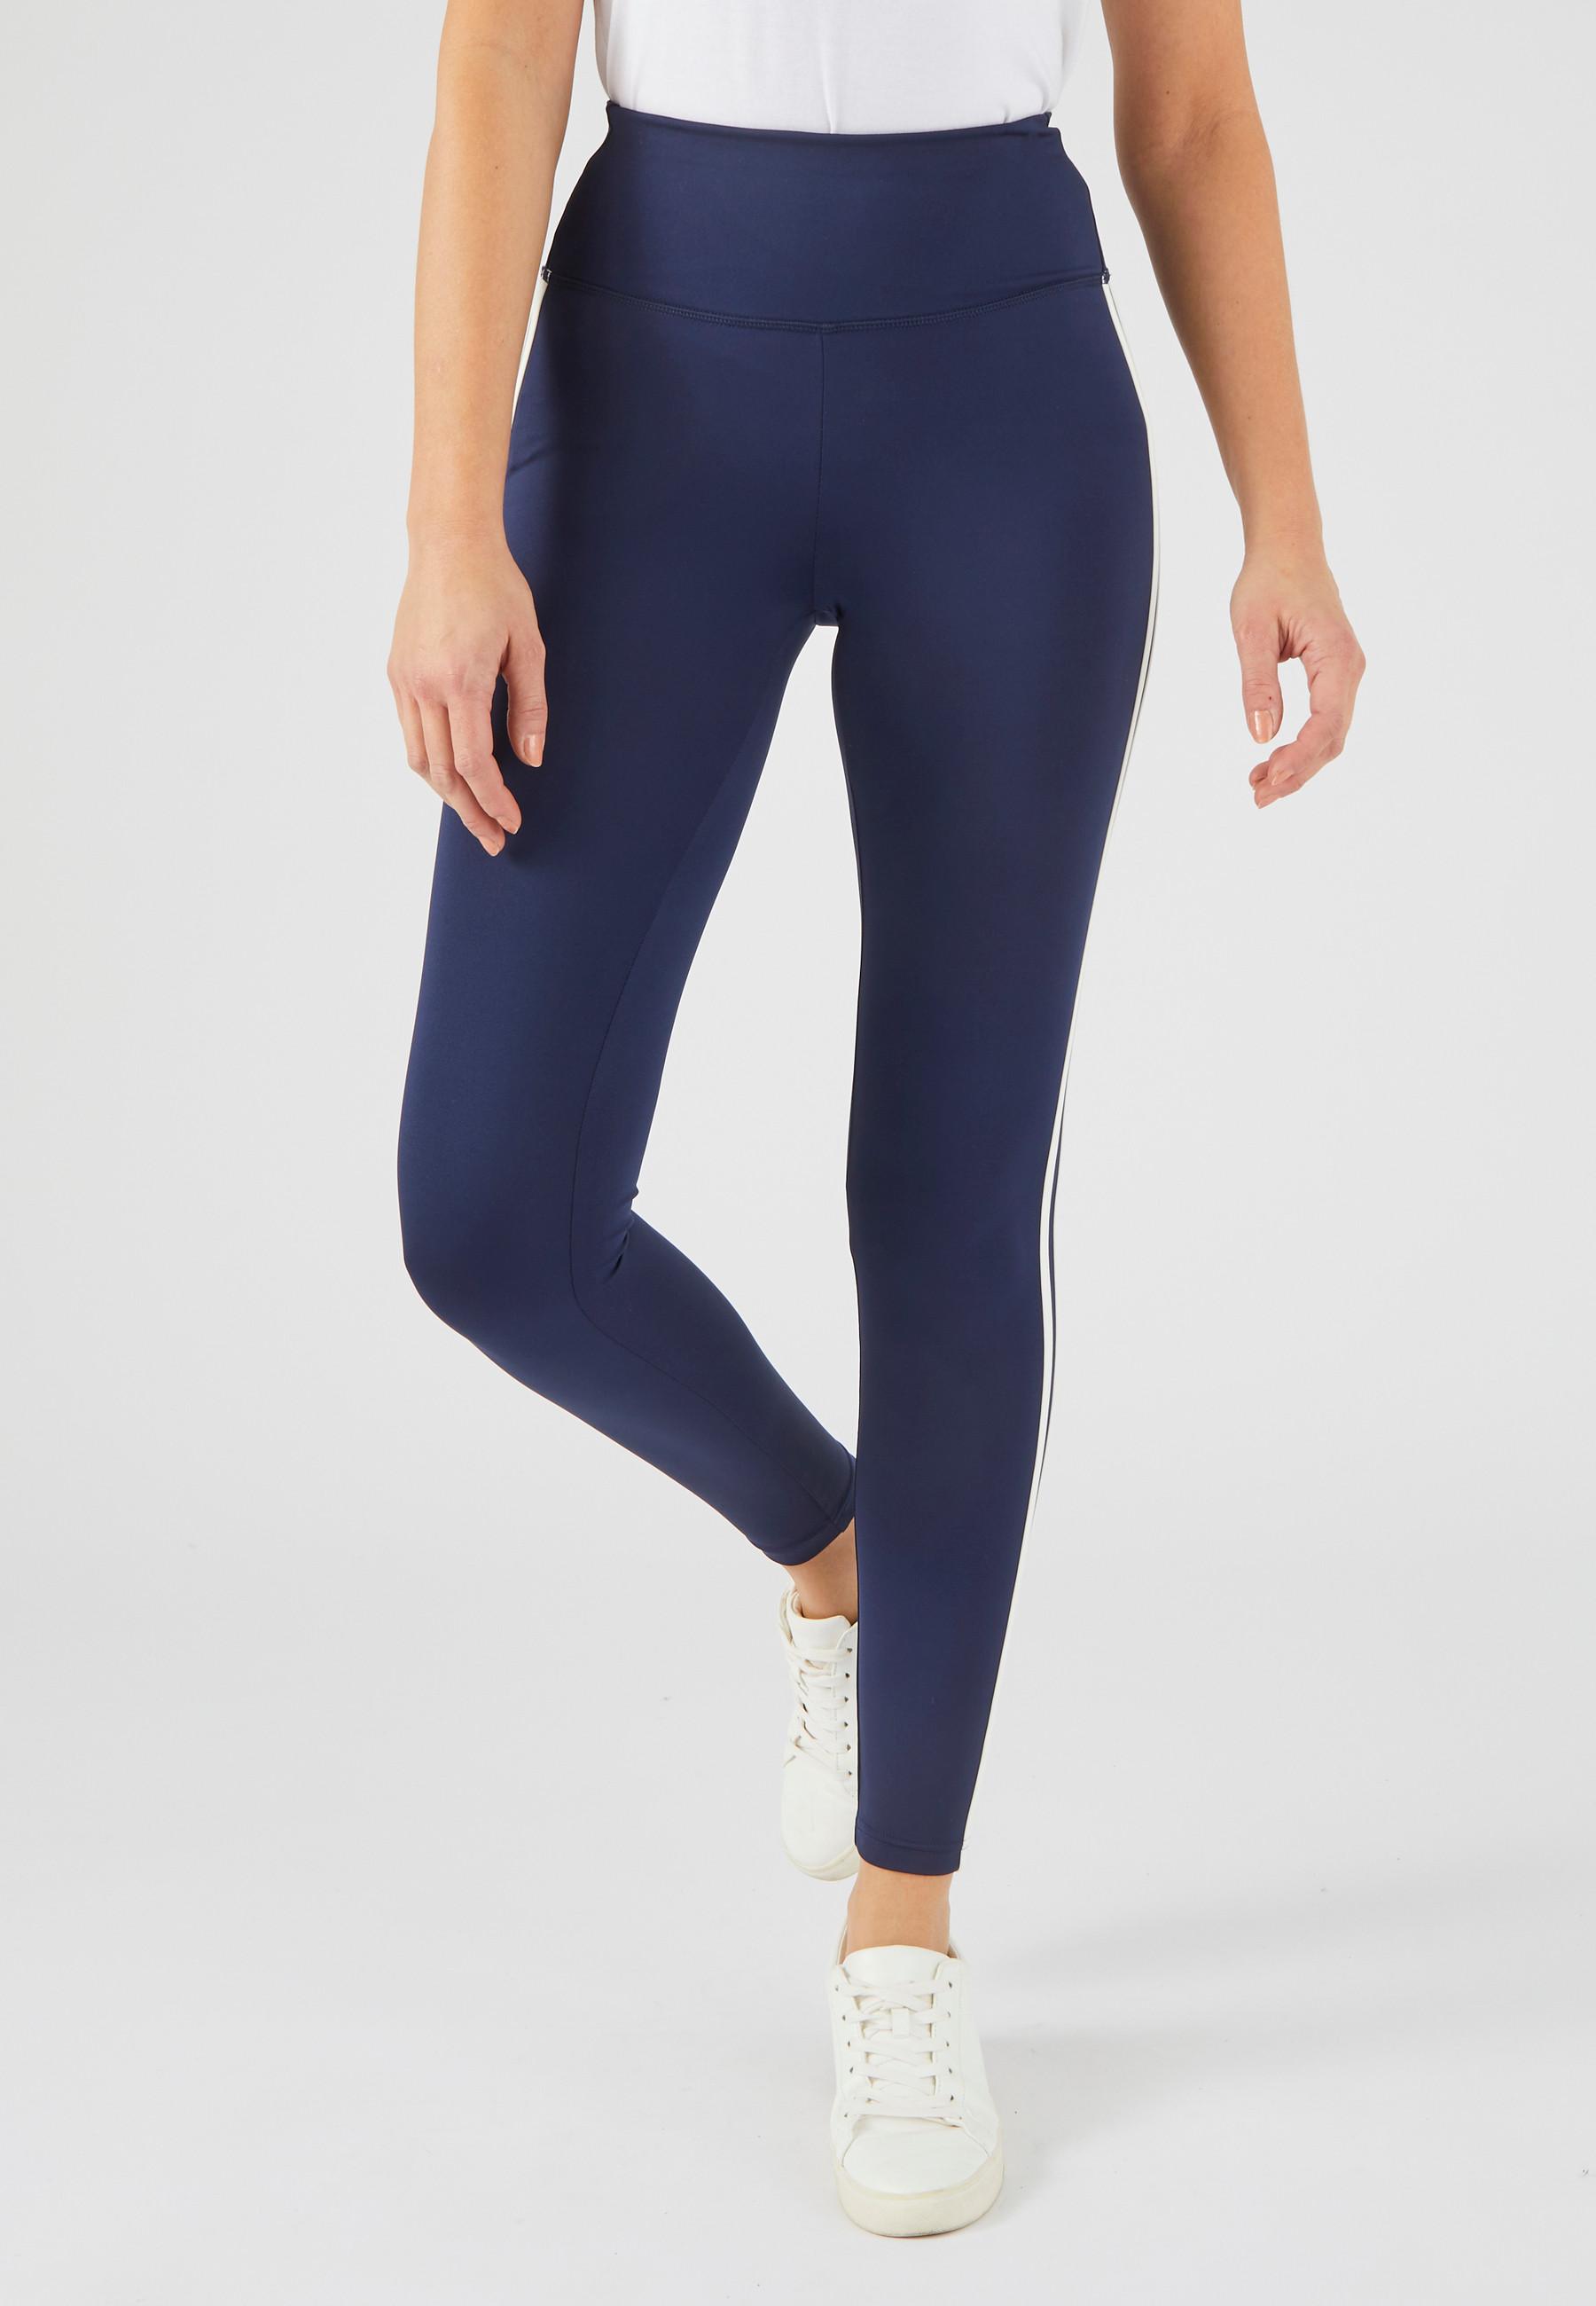 Sport-leggings, Perfect Fit By . Damen Blau 42/44 von Damart